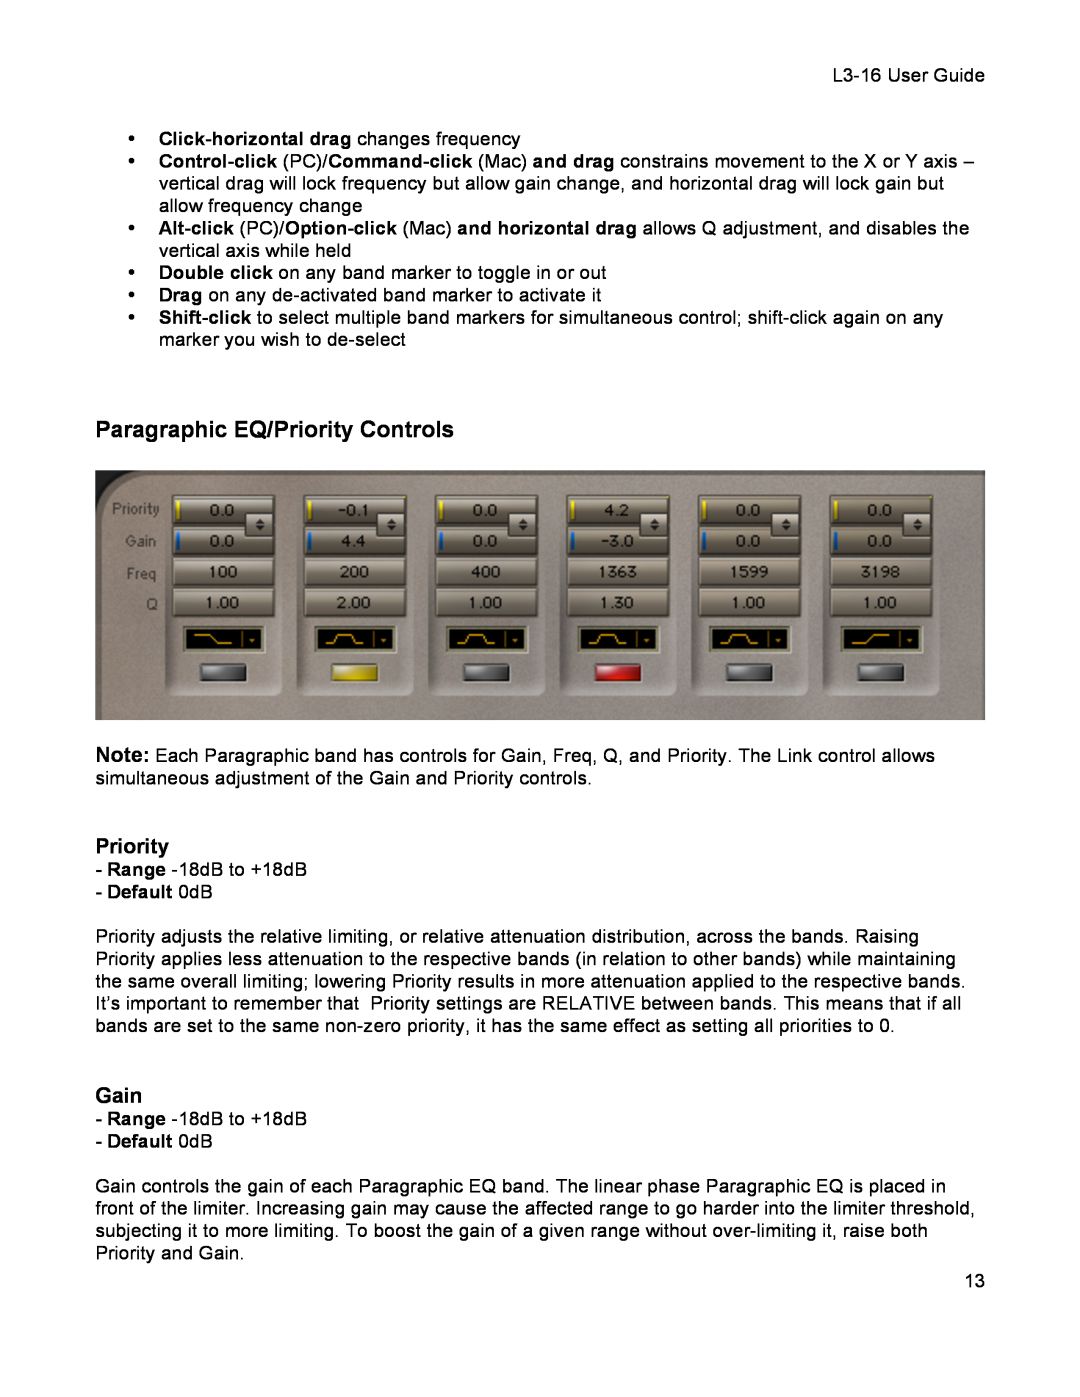 Waves L3-16 user manual Paragraphic EQ/Priority Controls, Gain 